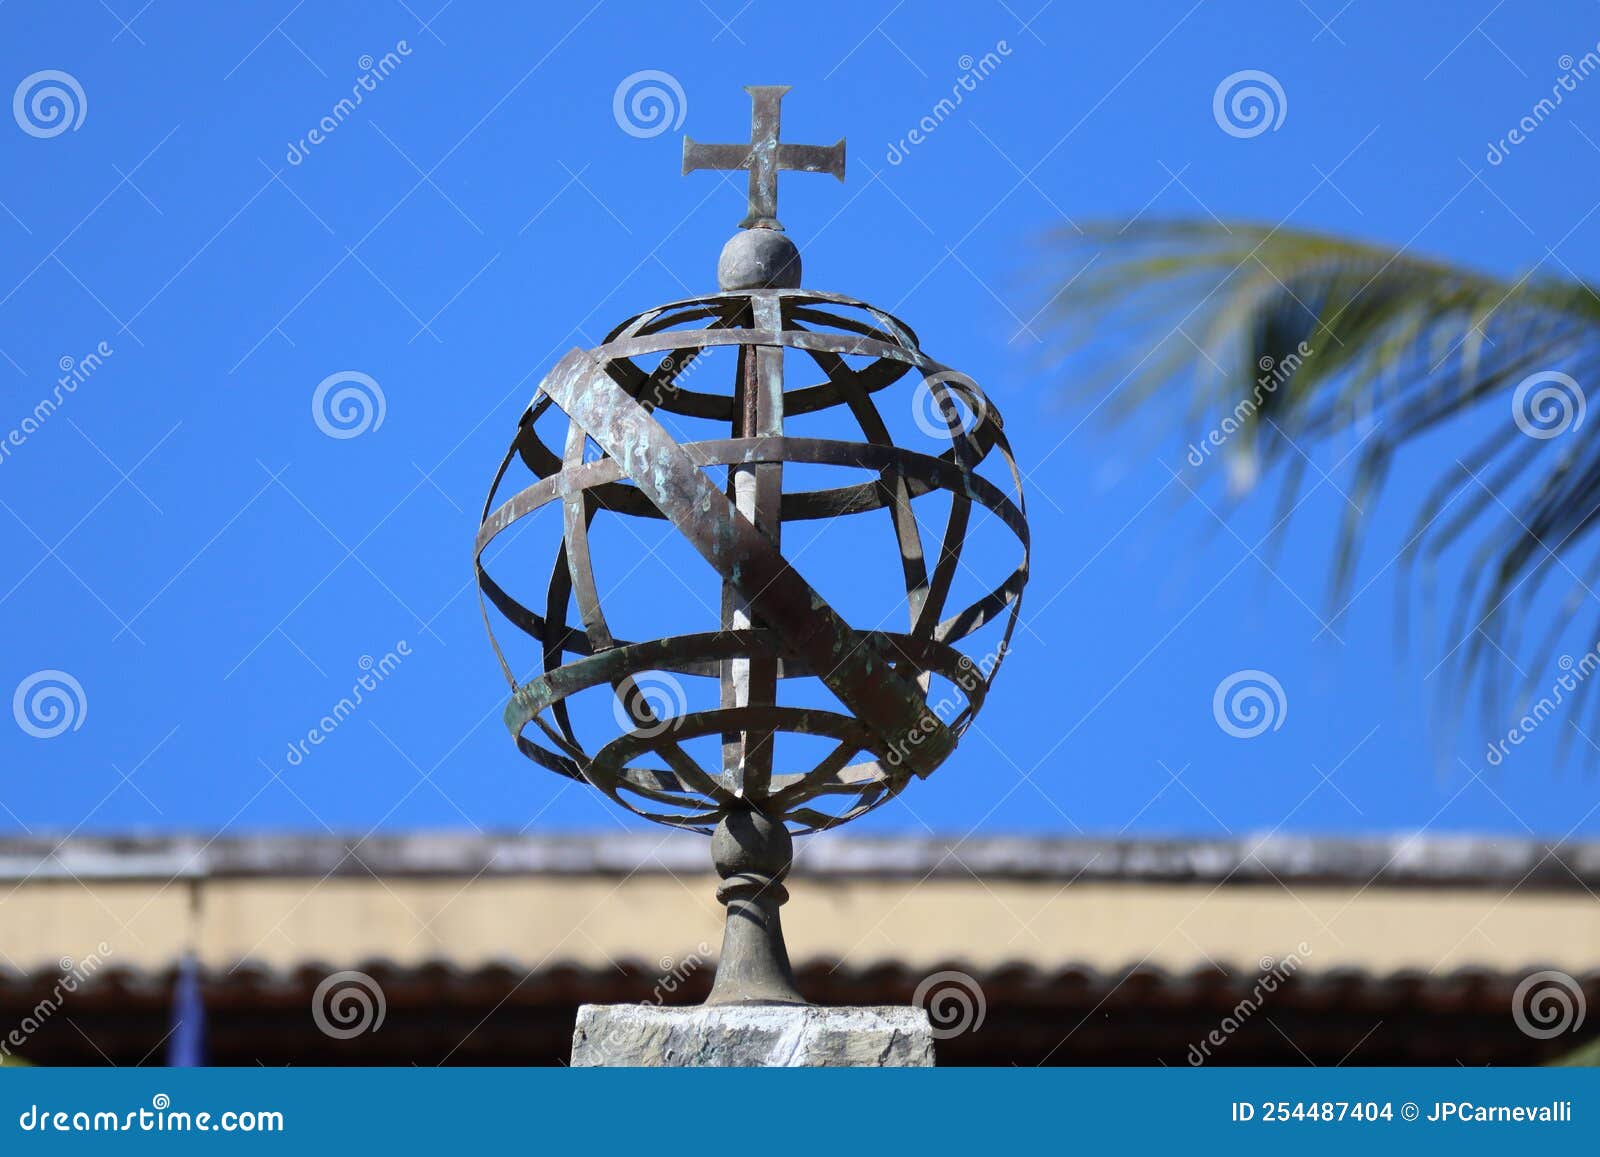 metal armillary sphere, esfera armilar, a portugal  and old navigation tool, at fernando de noronha, brazil